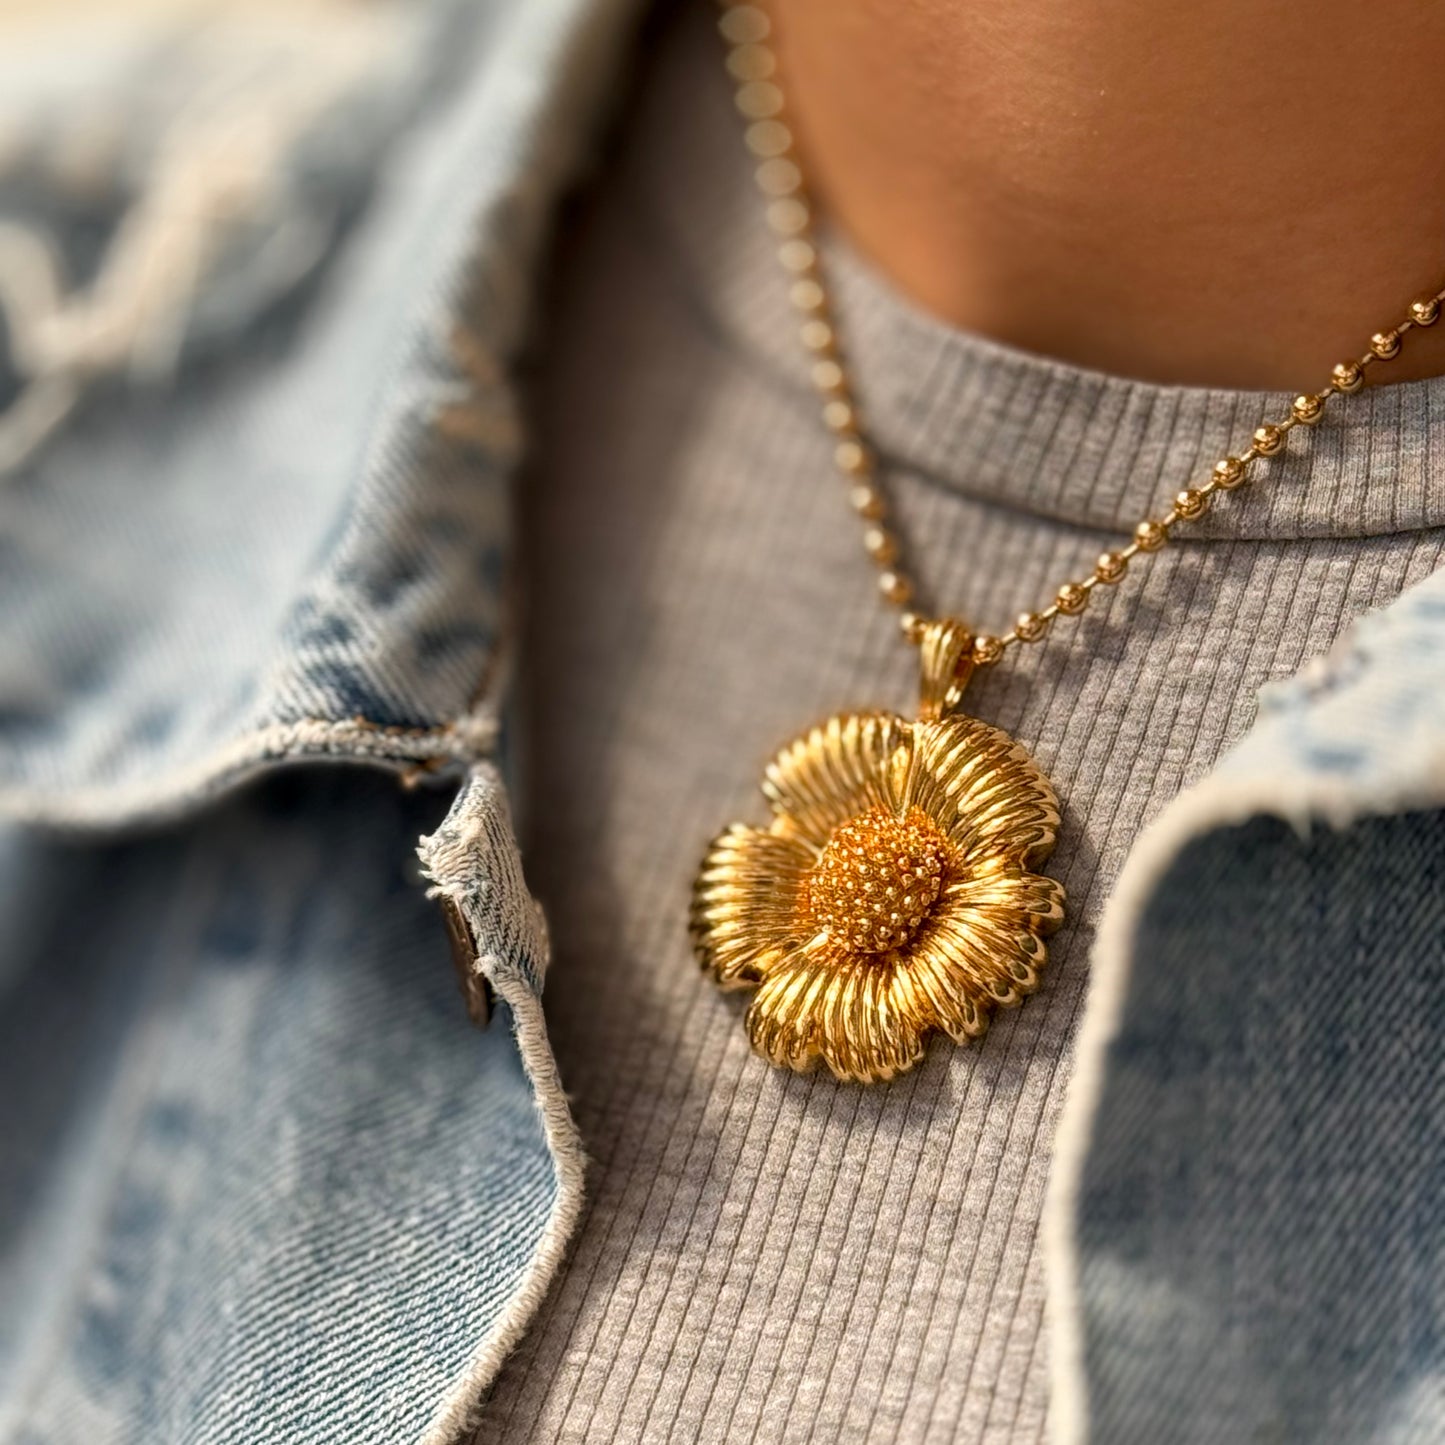 Adorable flower necklace